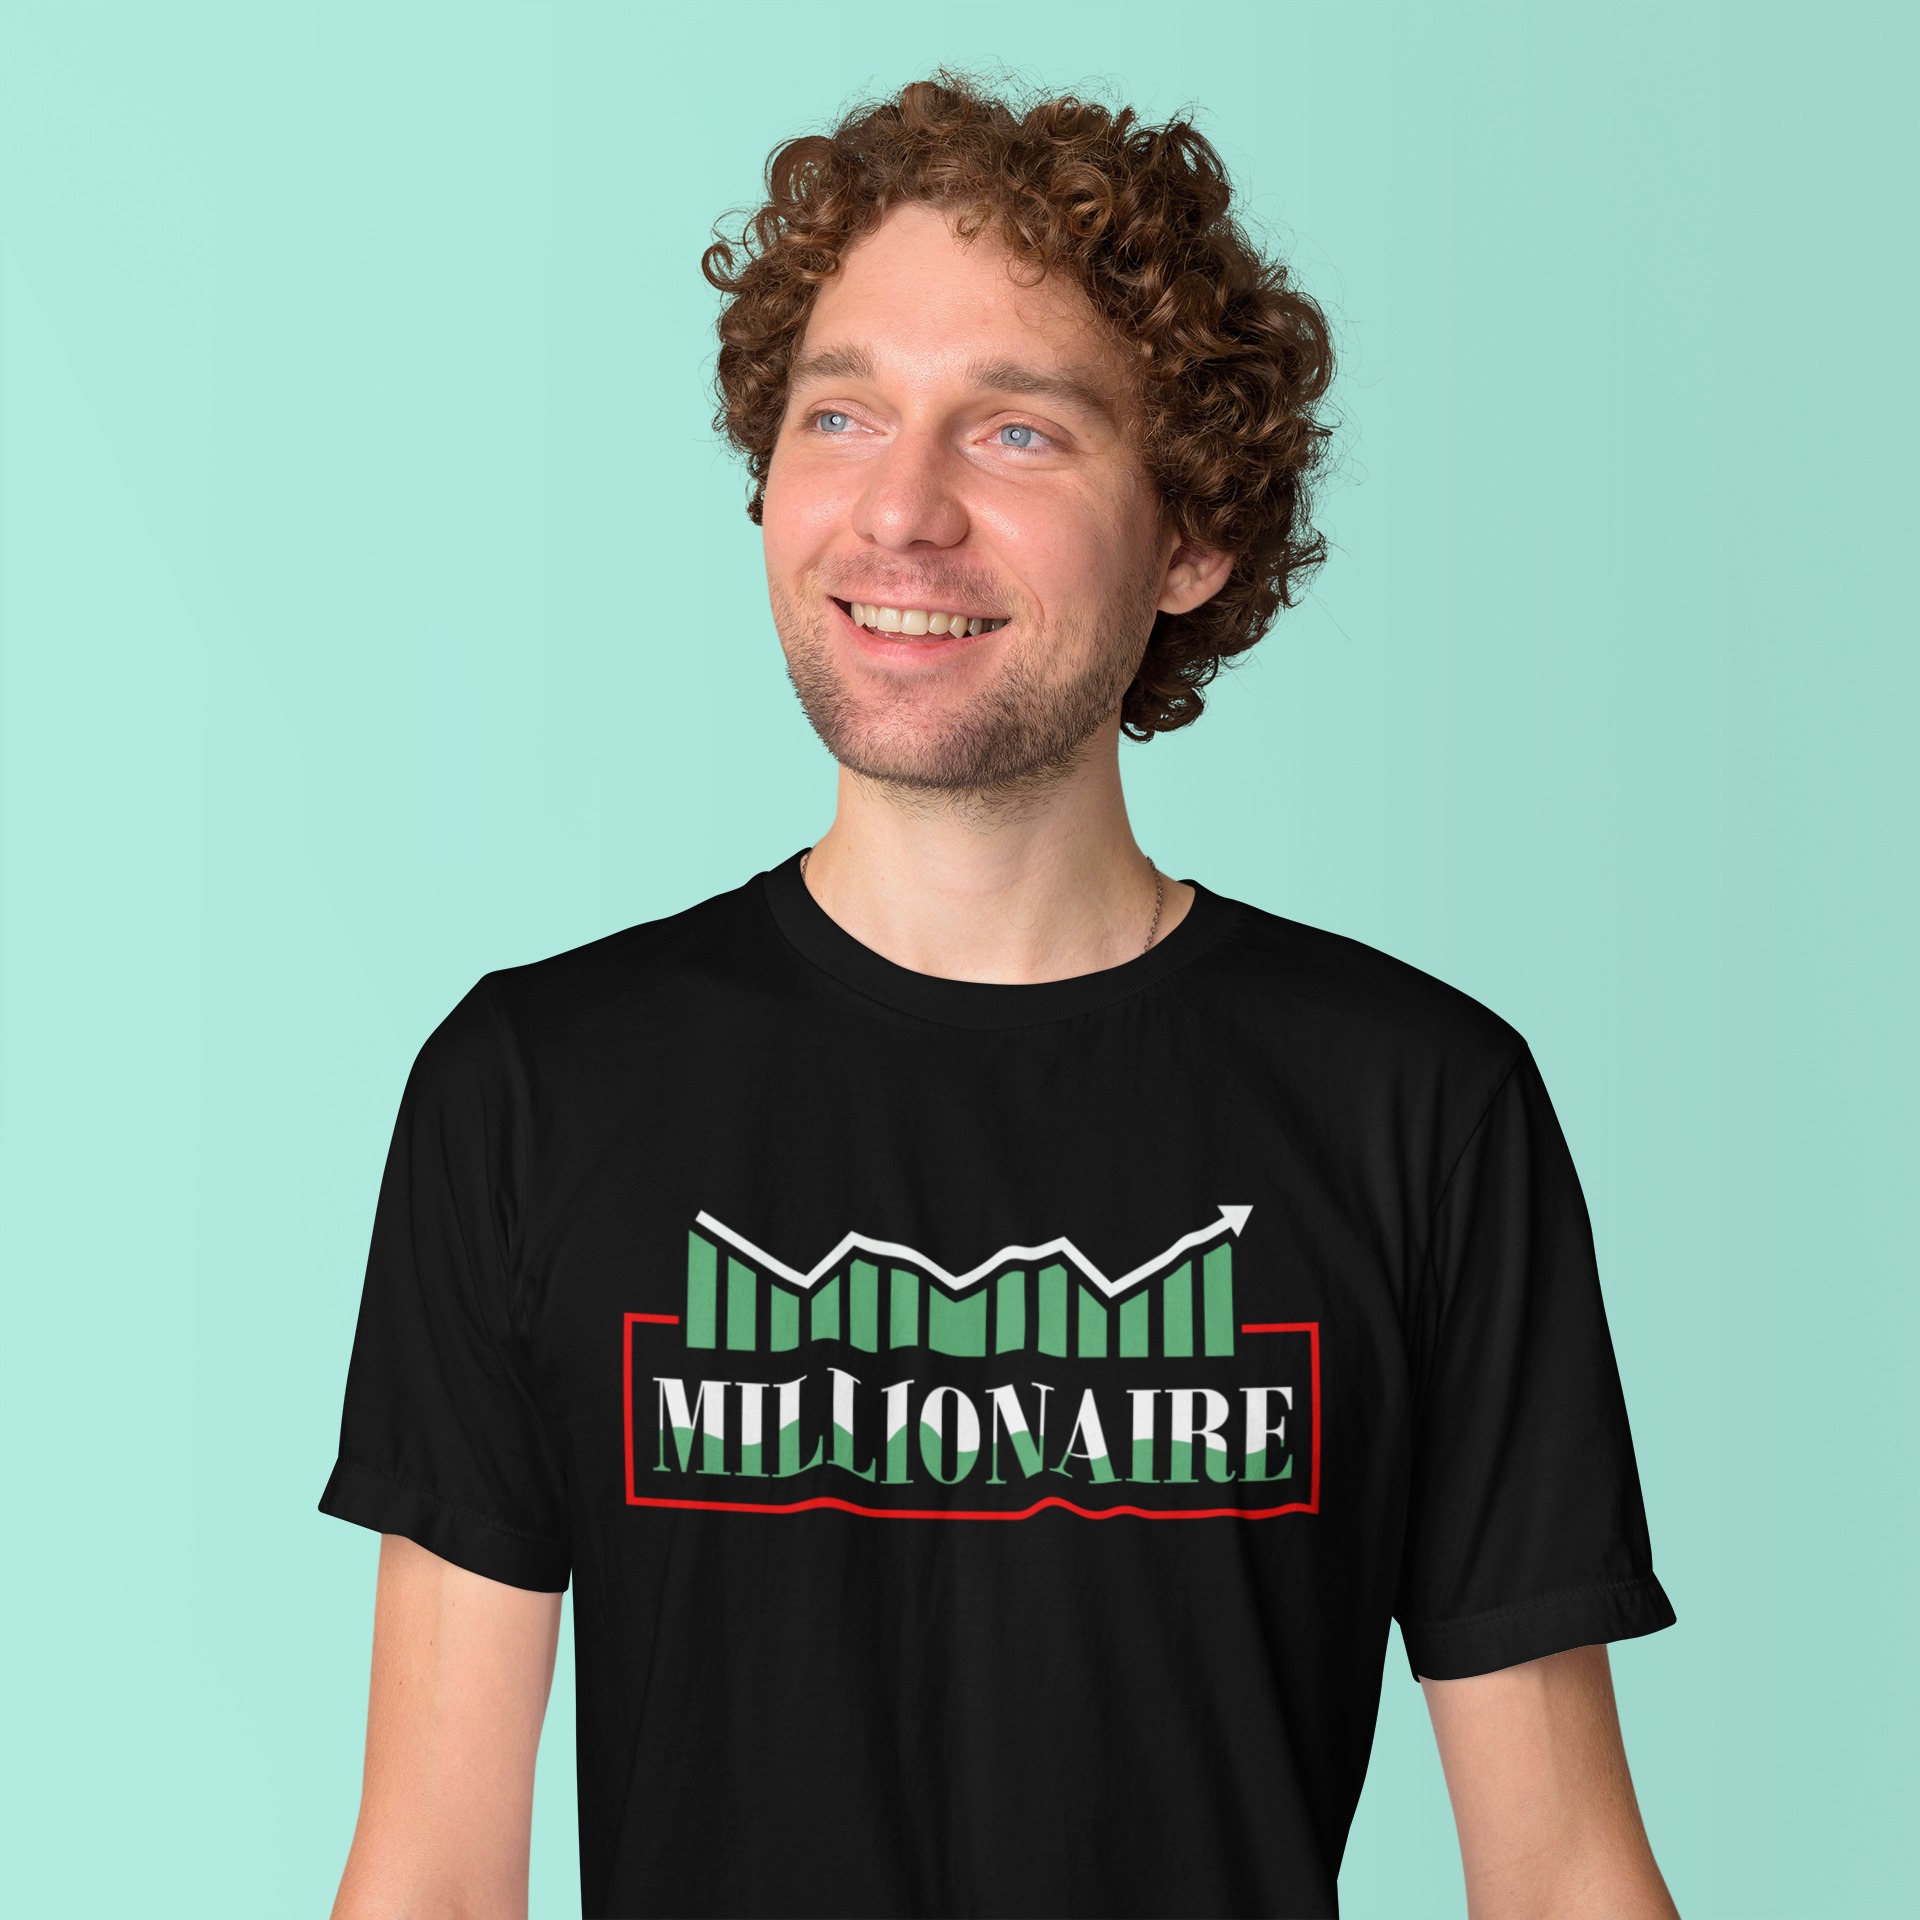 Millionaire (T-shirt) - tickermart.com